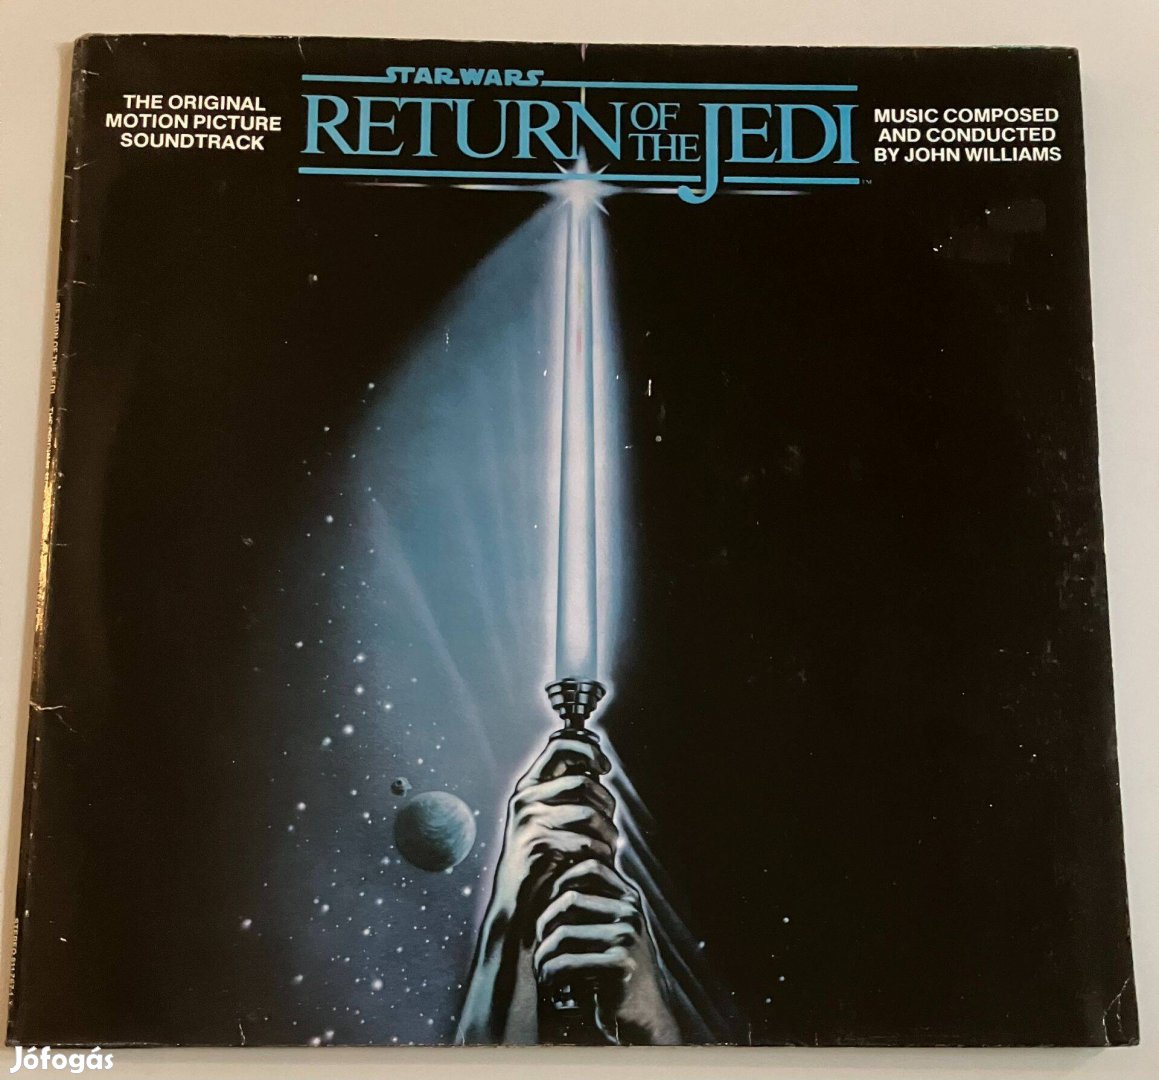 Star Wars: Return of the Jedi (eredeti flmzene, német)